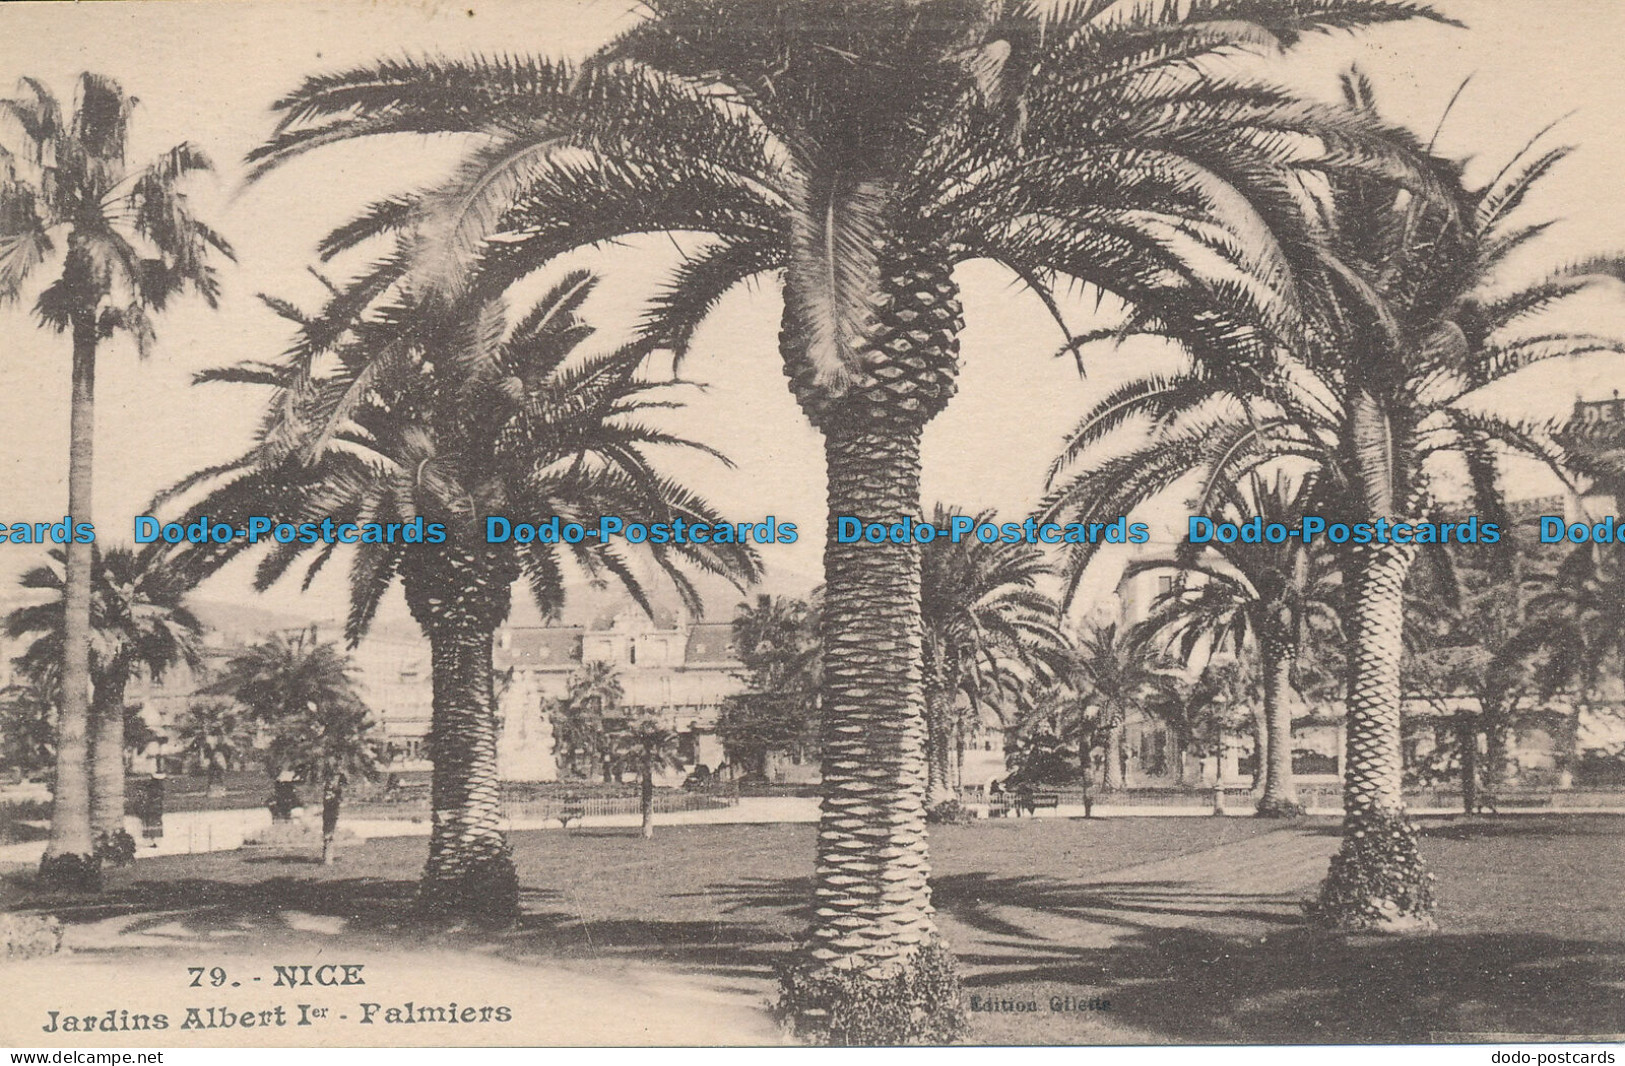 R037614 Nice. Jardins Albert Ier. Palmiers. Giletta. B. Hopkins - World